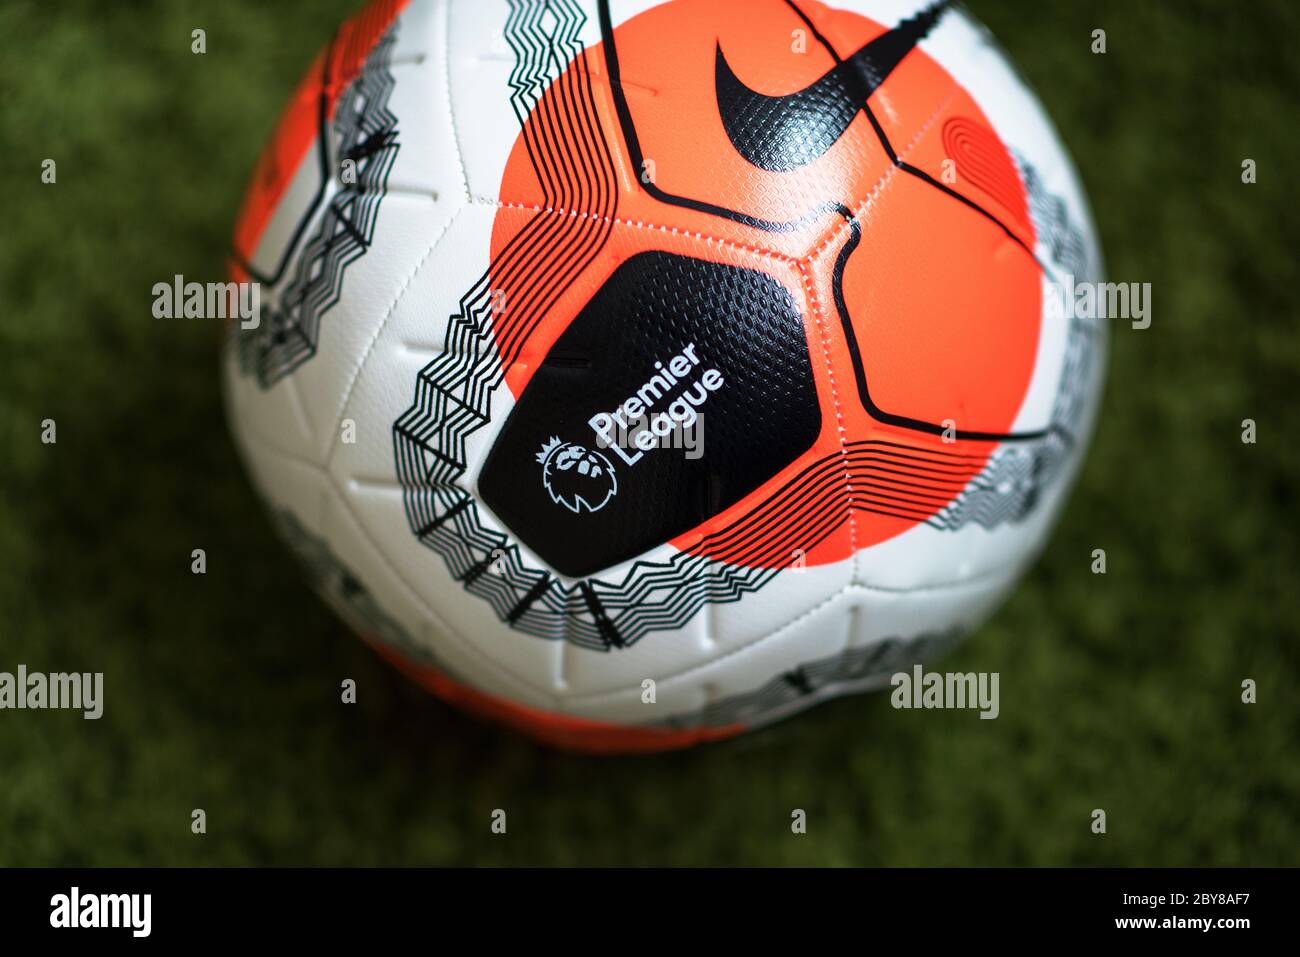 Nike Merlin Premier League Football 2019/20 Stock Photo